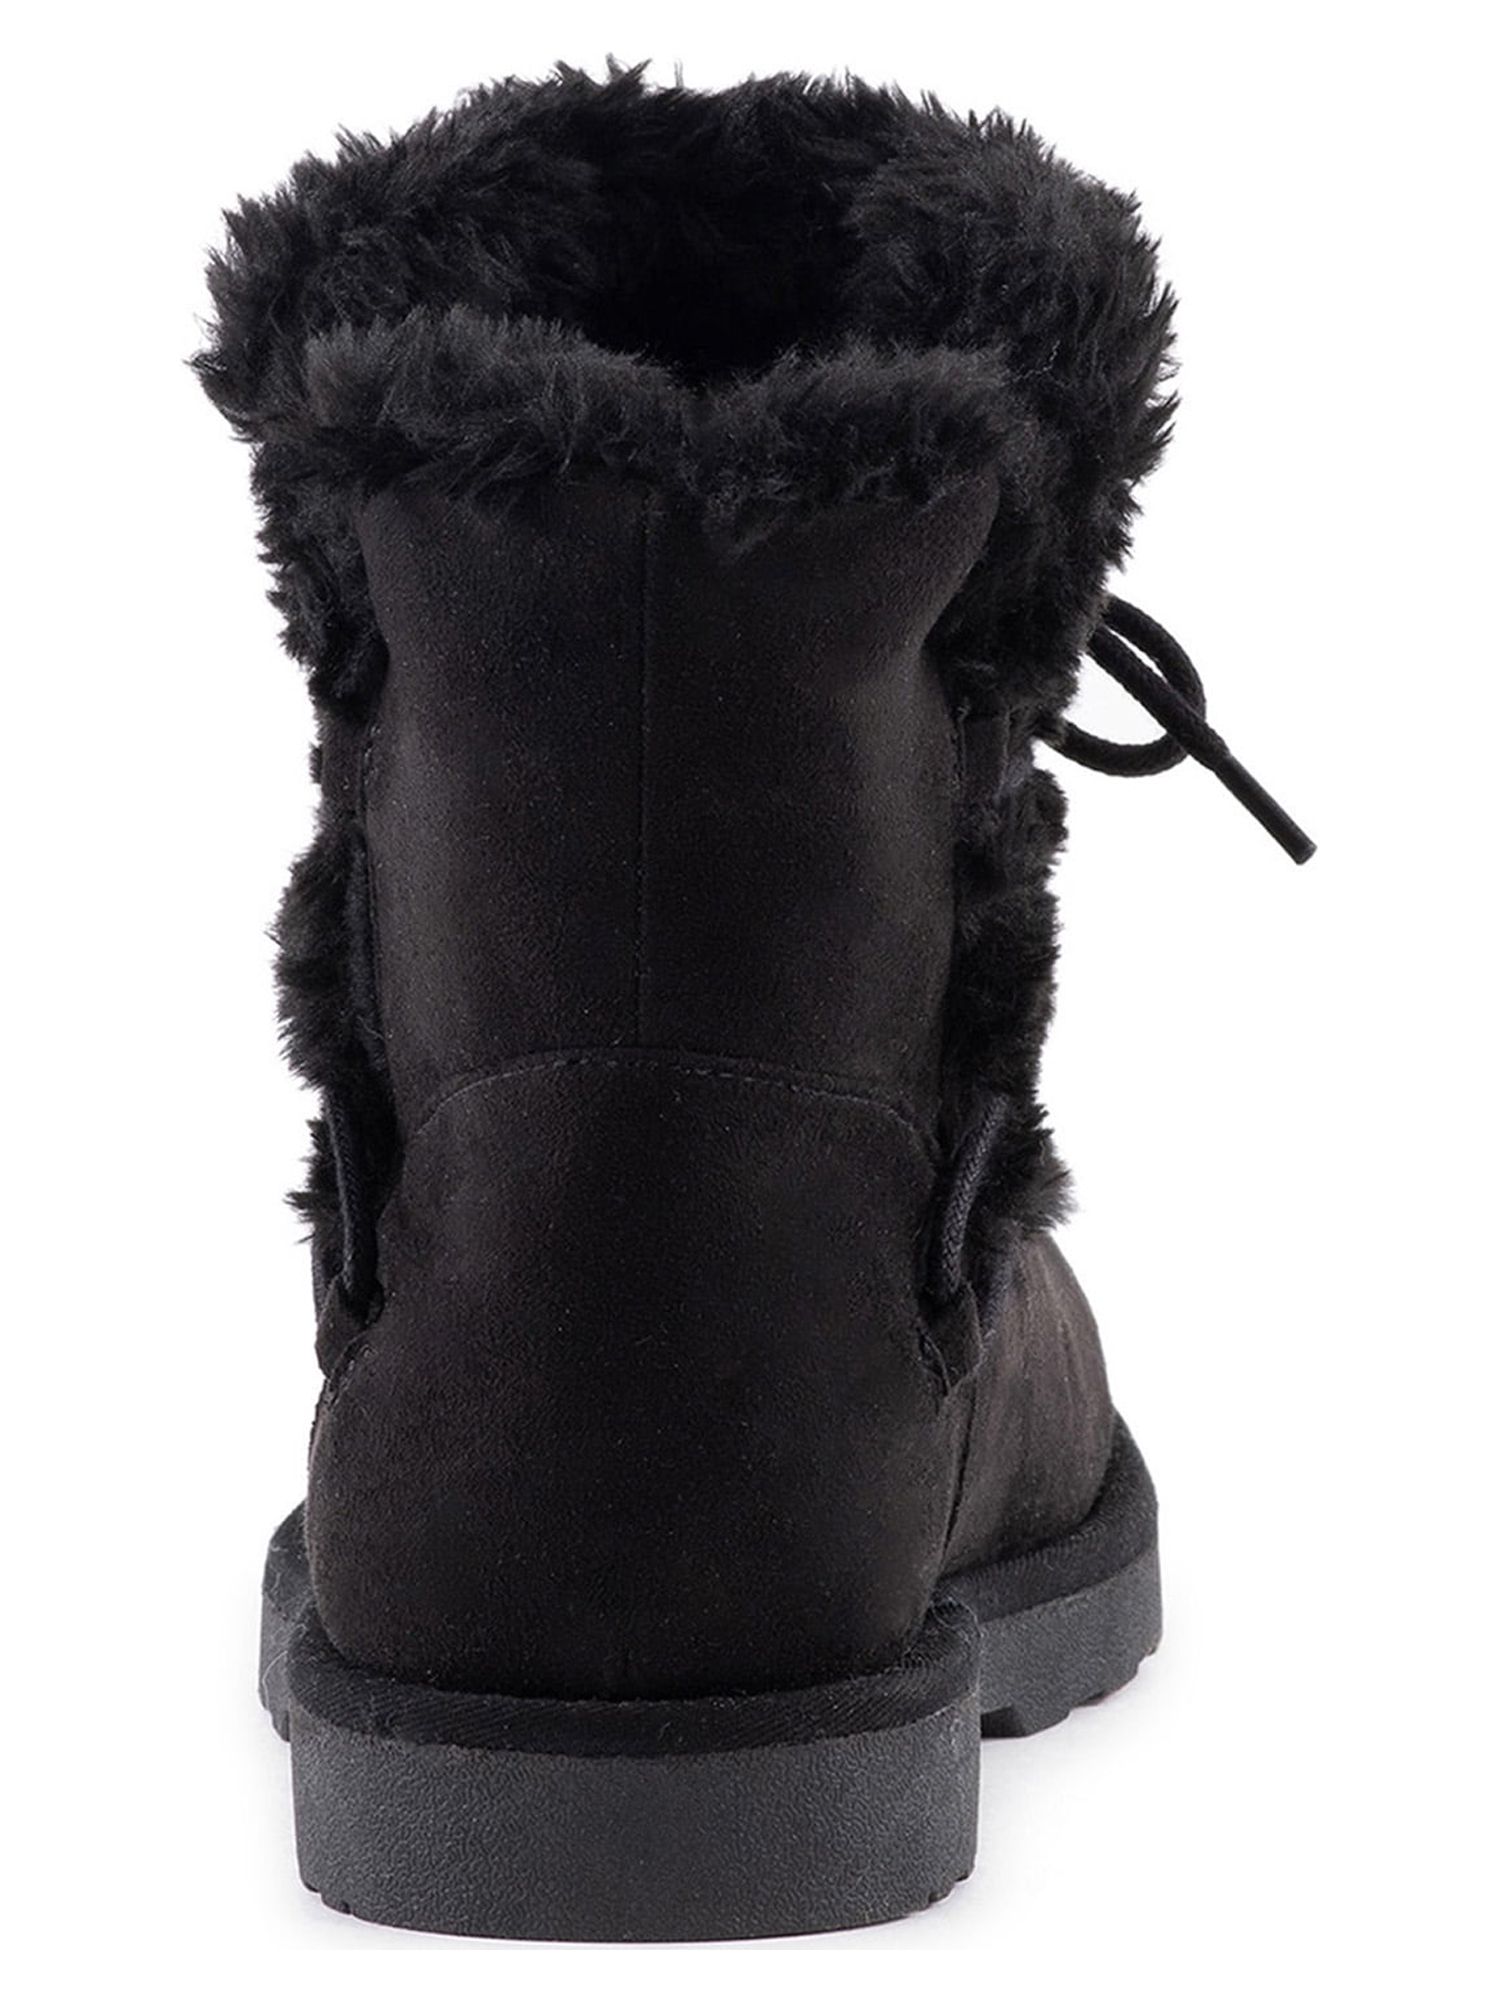 Portland Boot Company Women’s Faux Fur Short Boot - image 4 of 4